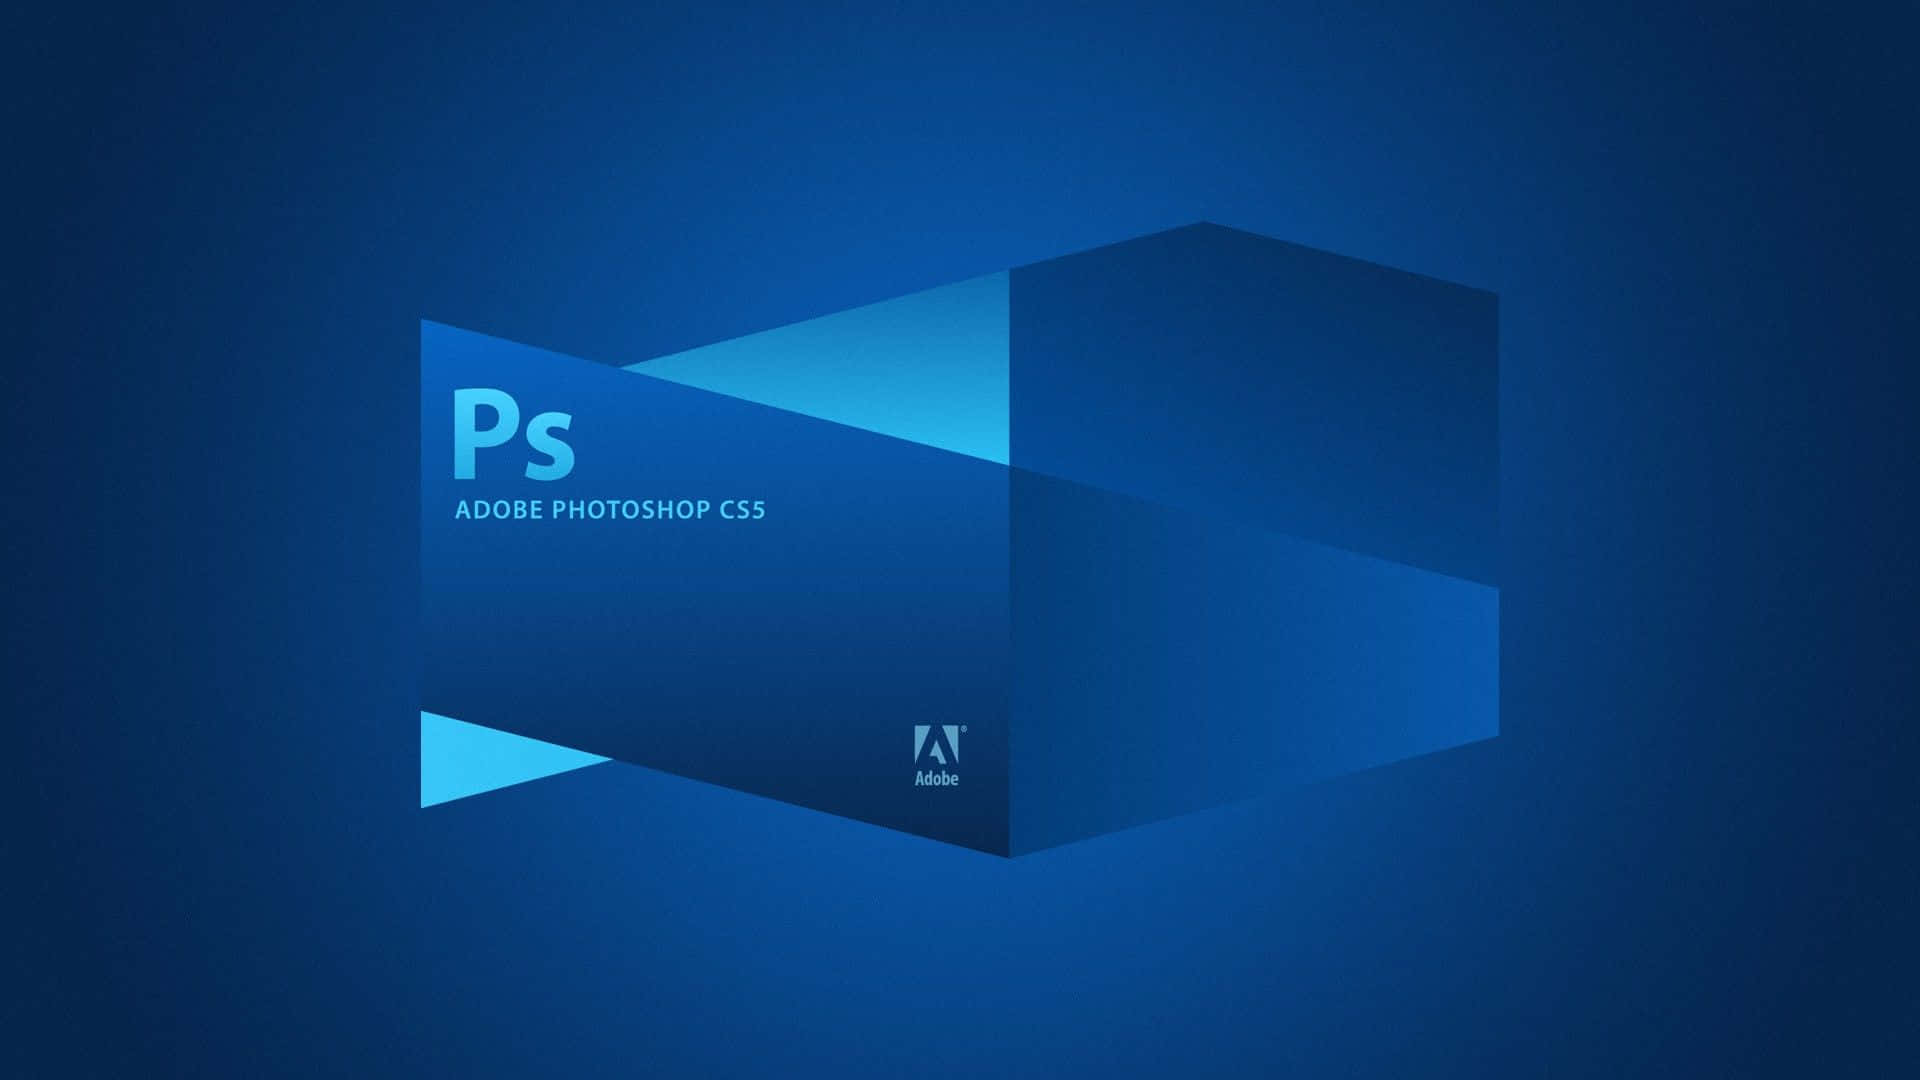 Adobe Photoshop CS5 Interface Wallpaper